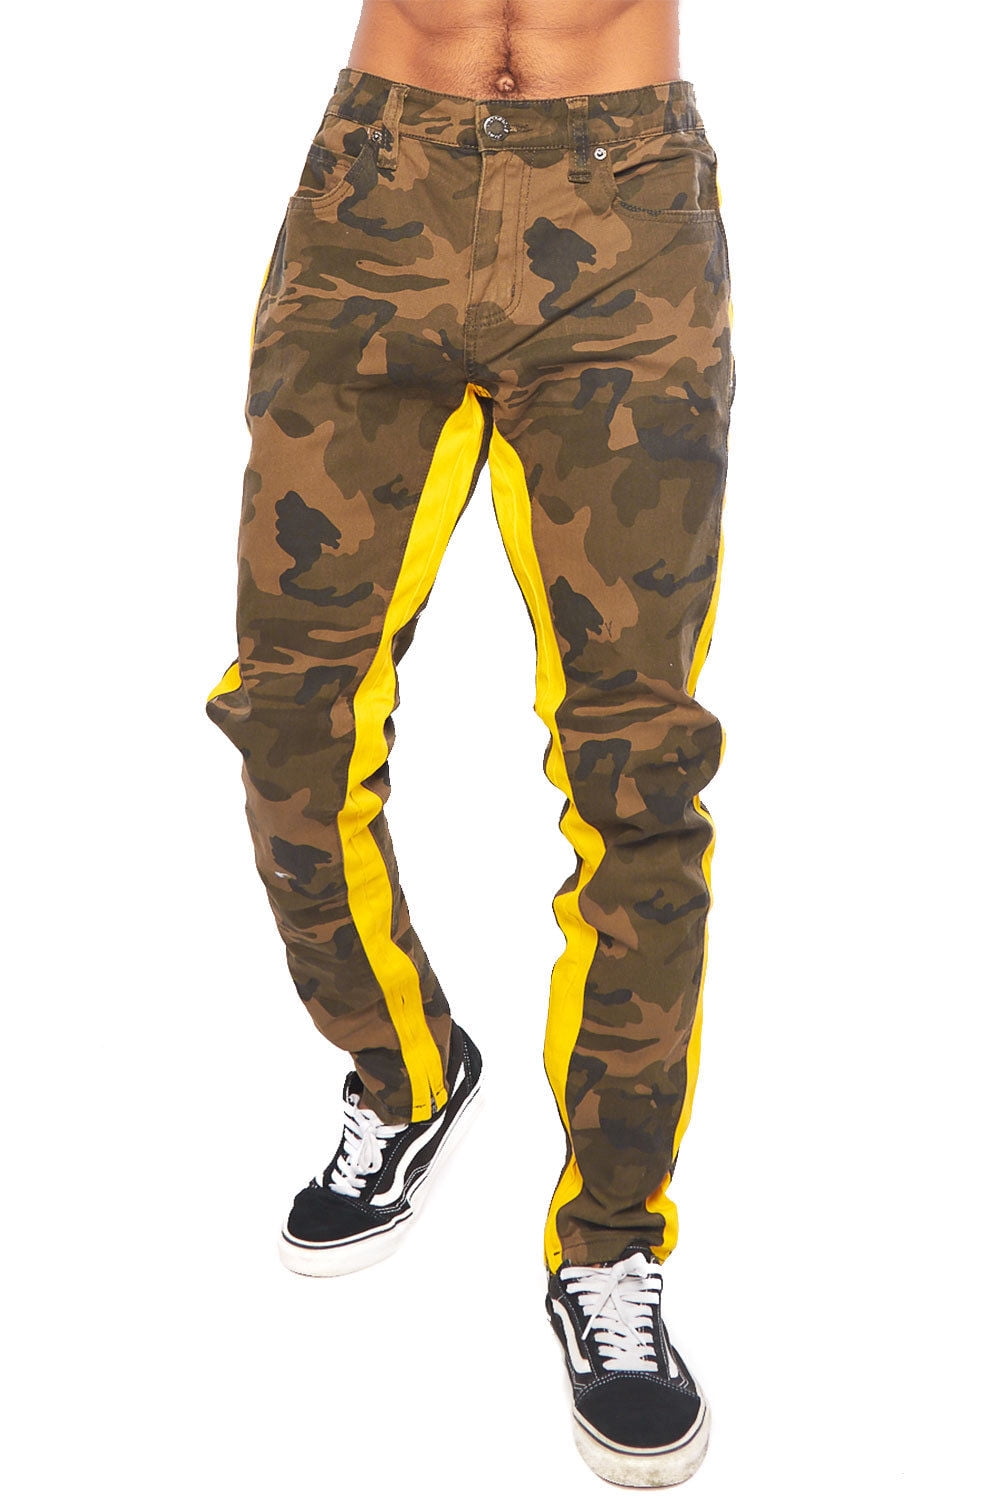 camo pants with yellow stripe